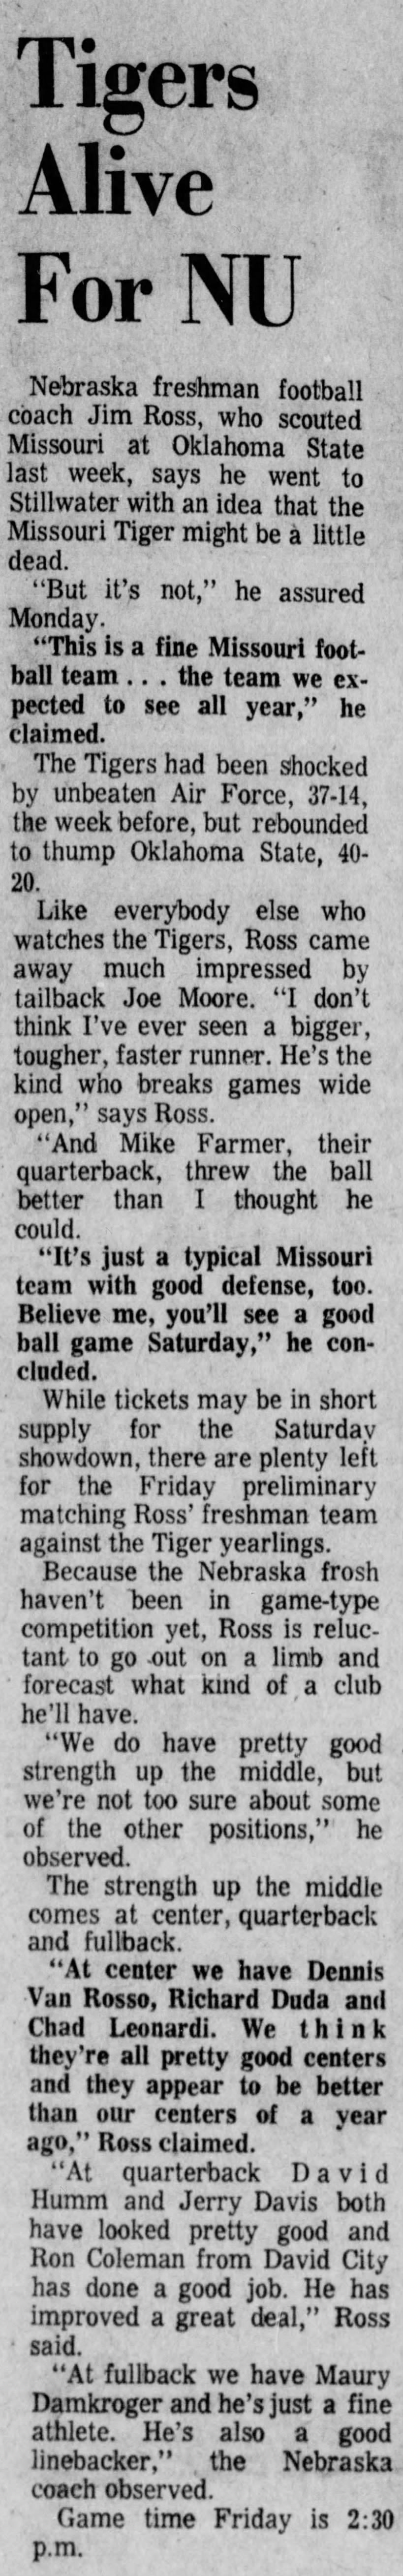 1970.09.05 Jim Ross scouting report on Missouri